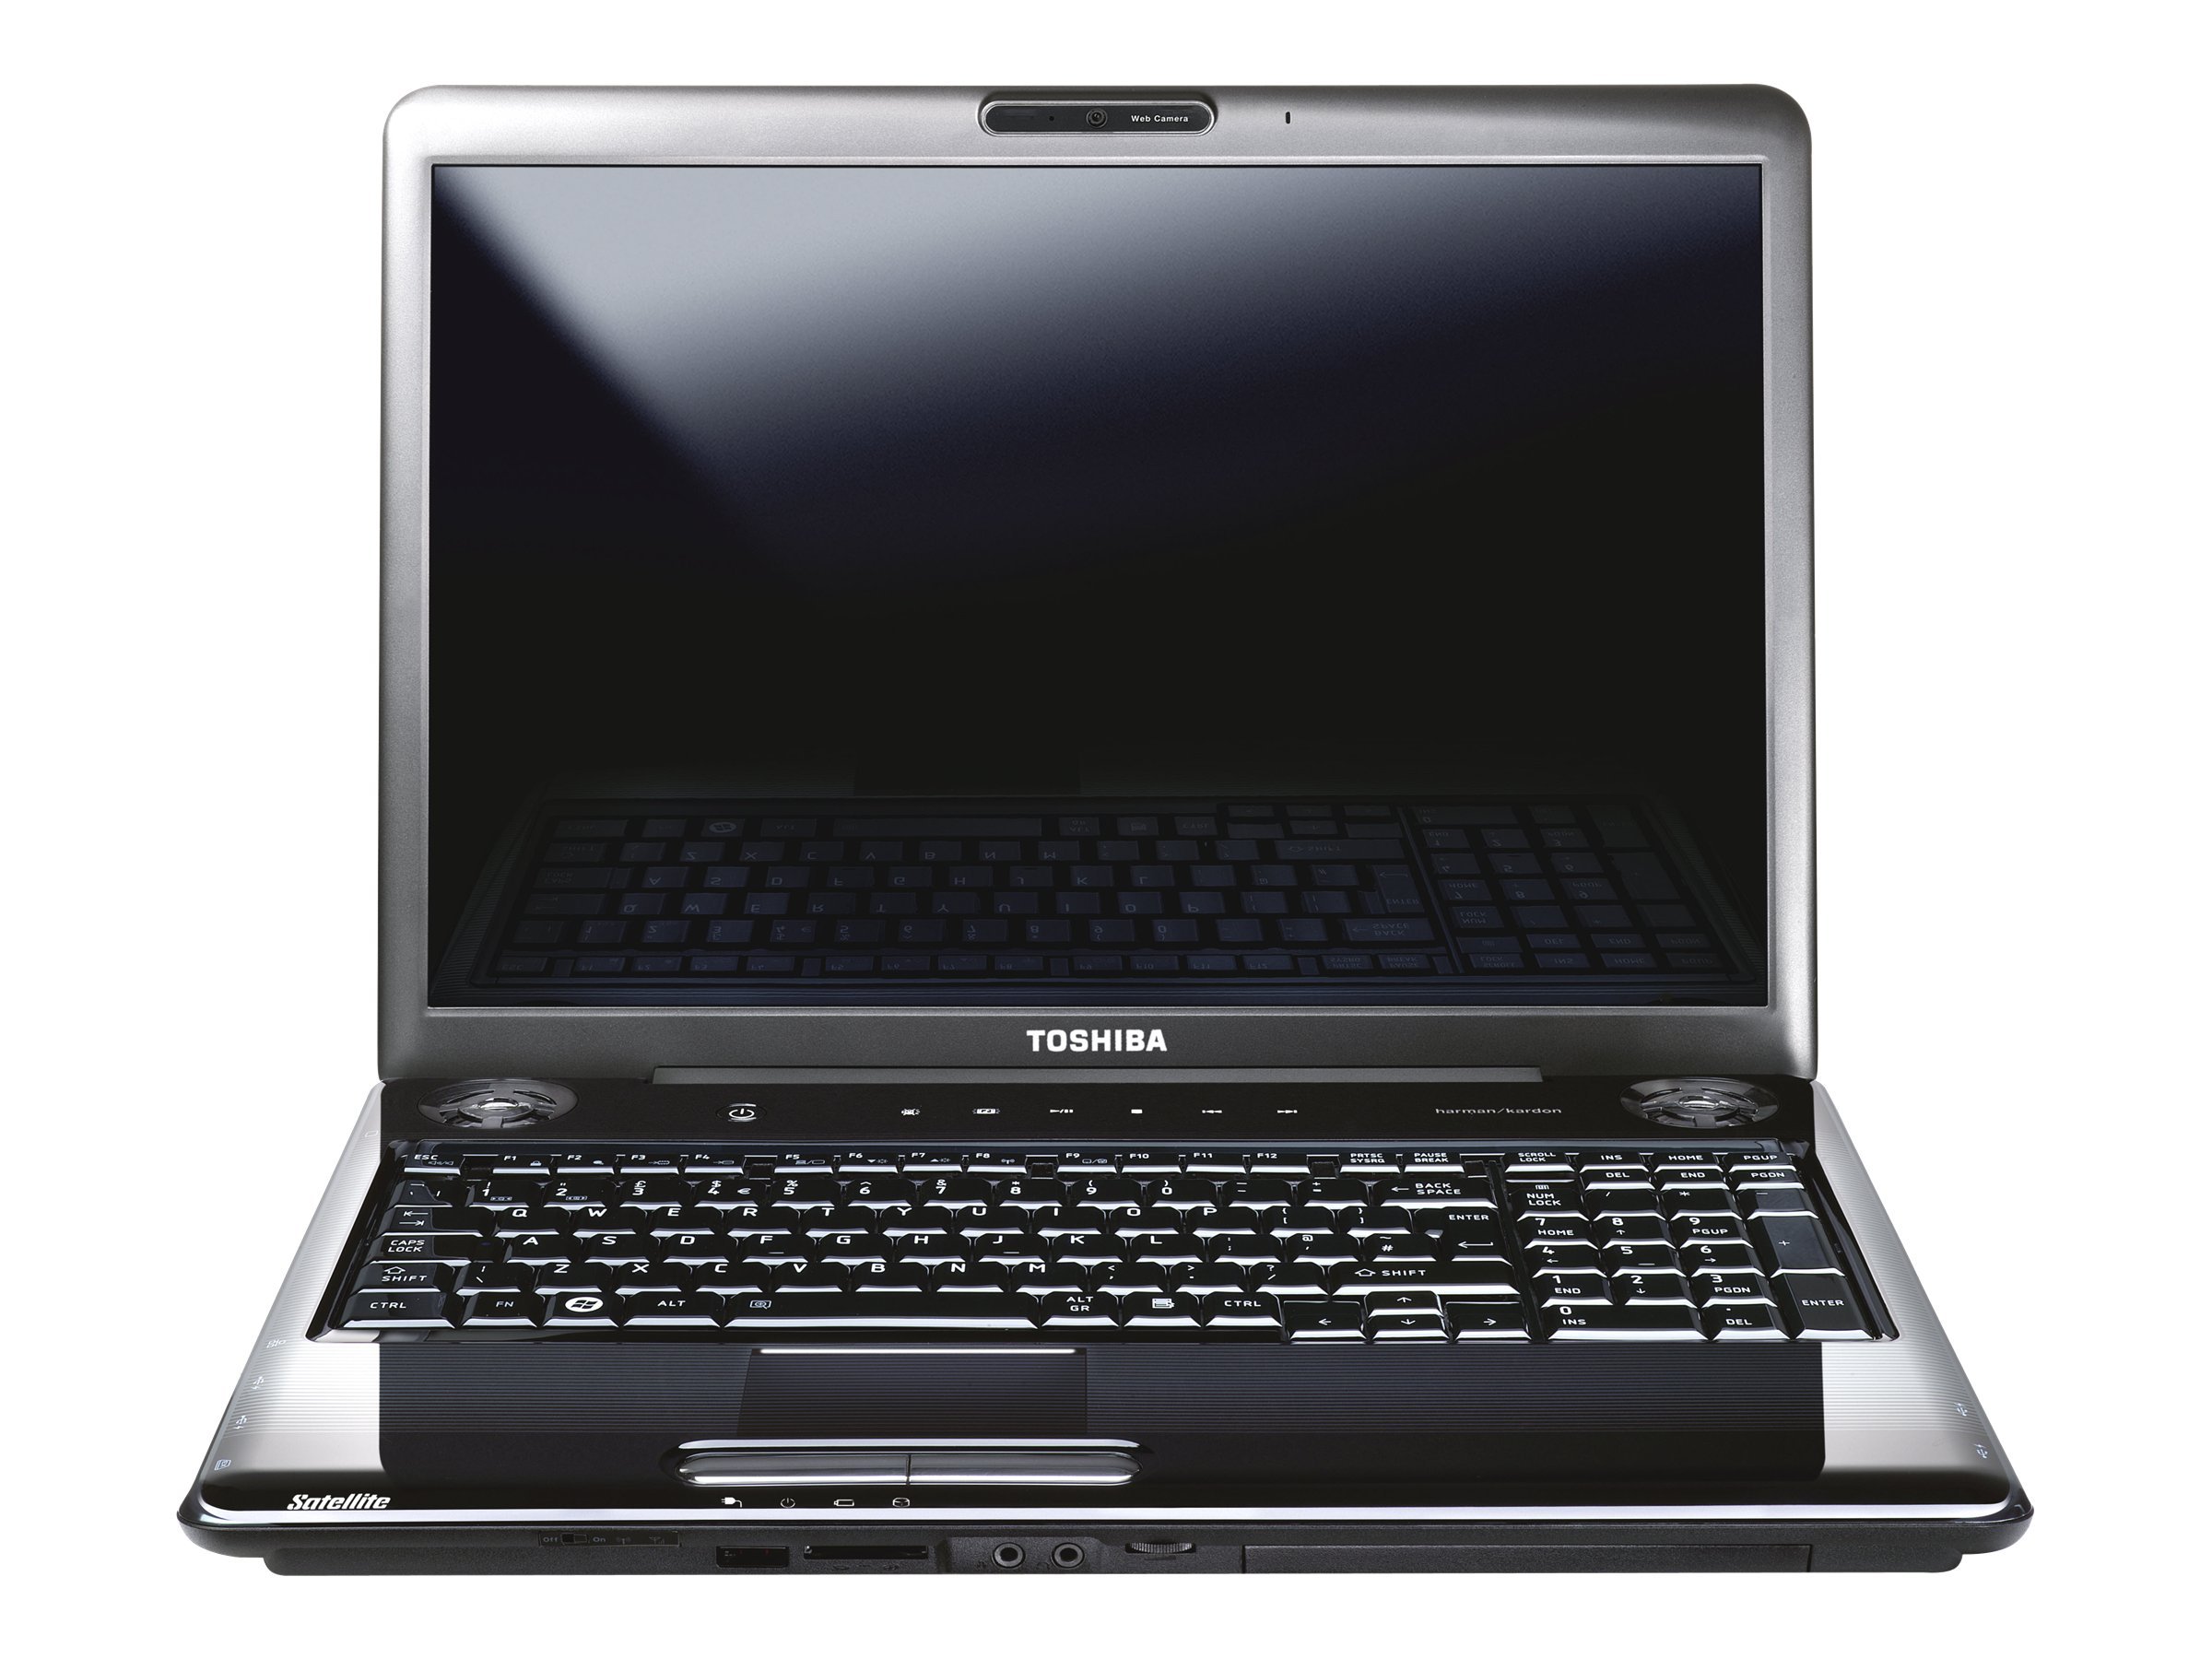 Toshiba Satellite L300 (Celeron 2GHz, 1GB RAM) review: Toshiba Satellite  L300 (Celeron 2GHz, 1GB RAM) - CNET